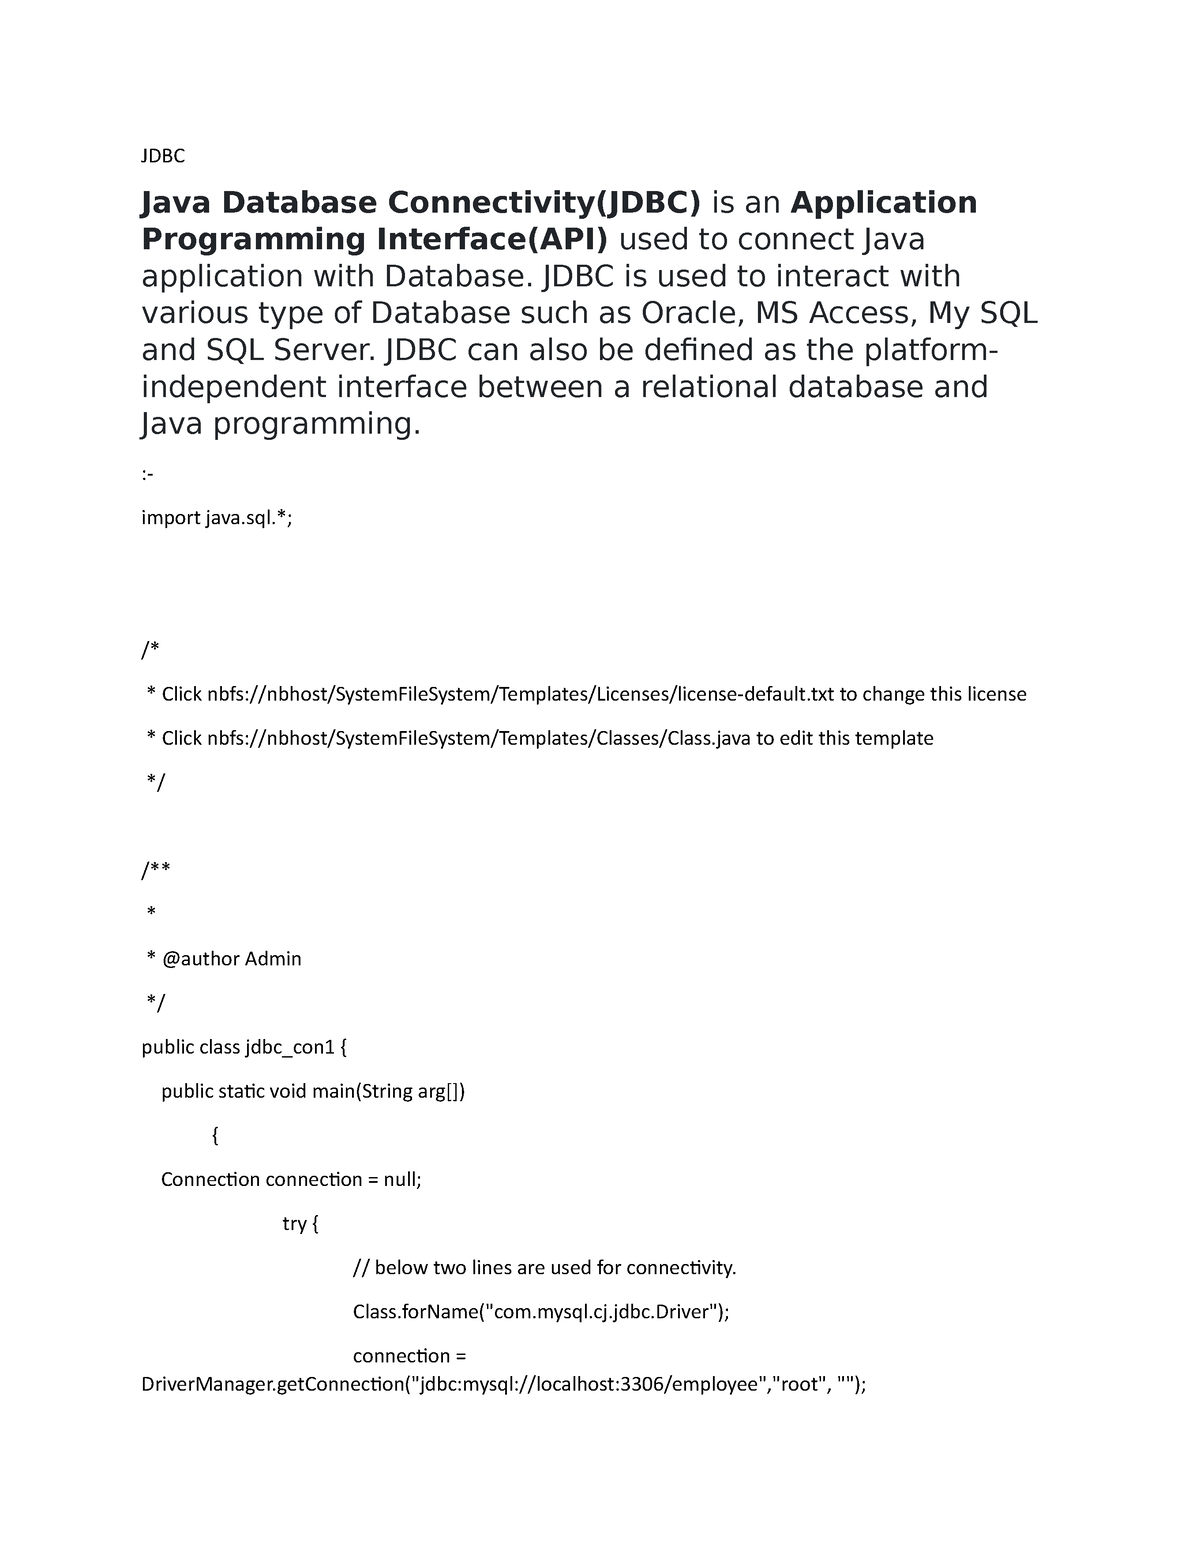 Chapter 12 JDBC JDBC Java Database Connectivity(JDBC) is an